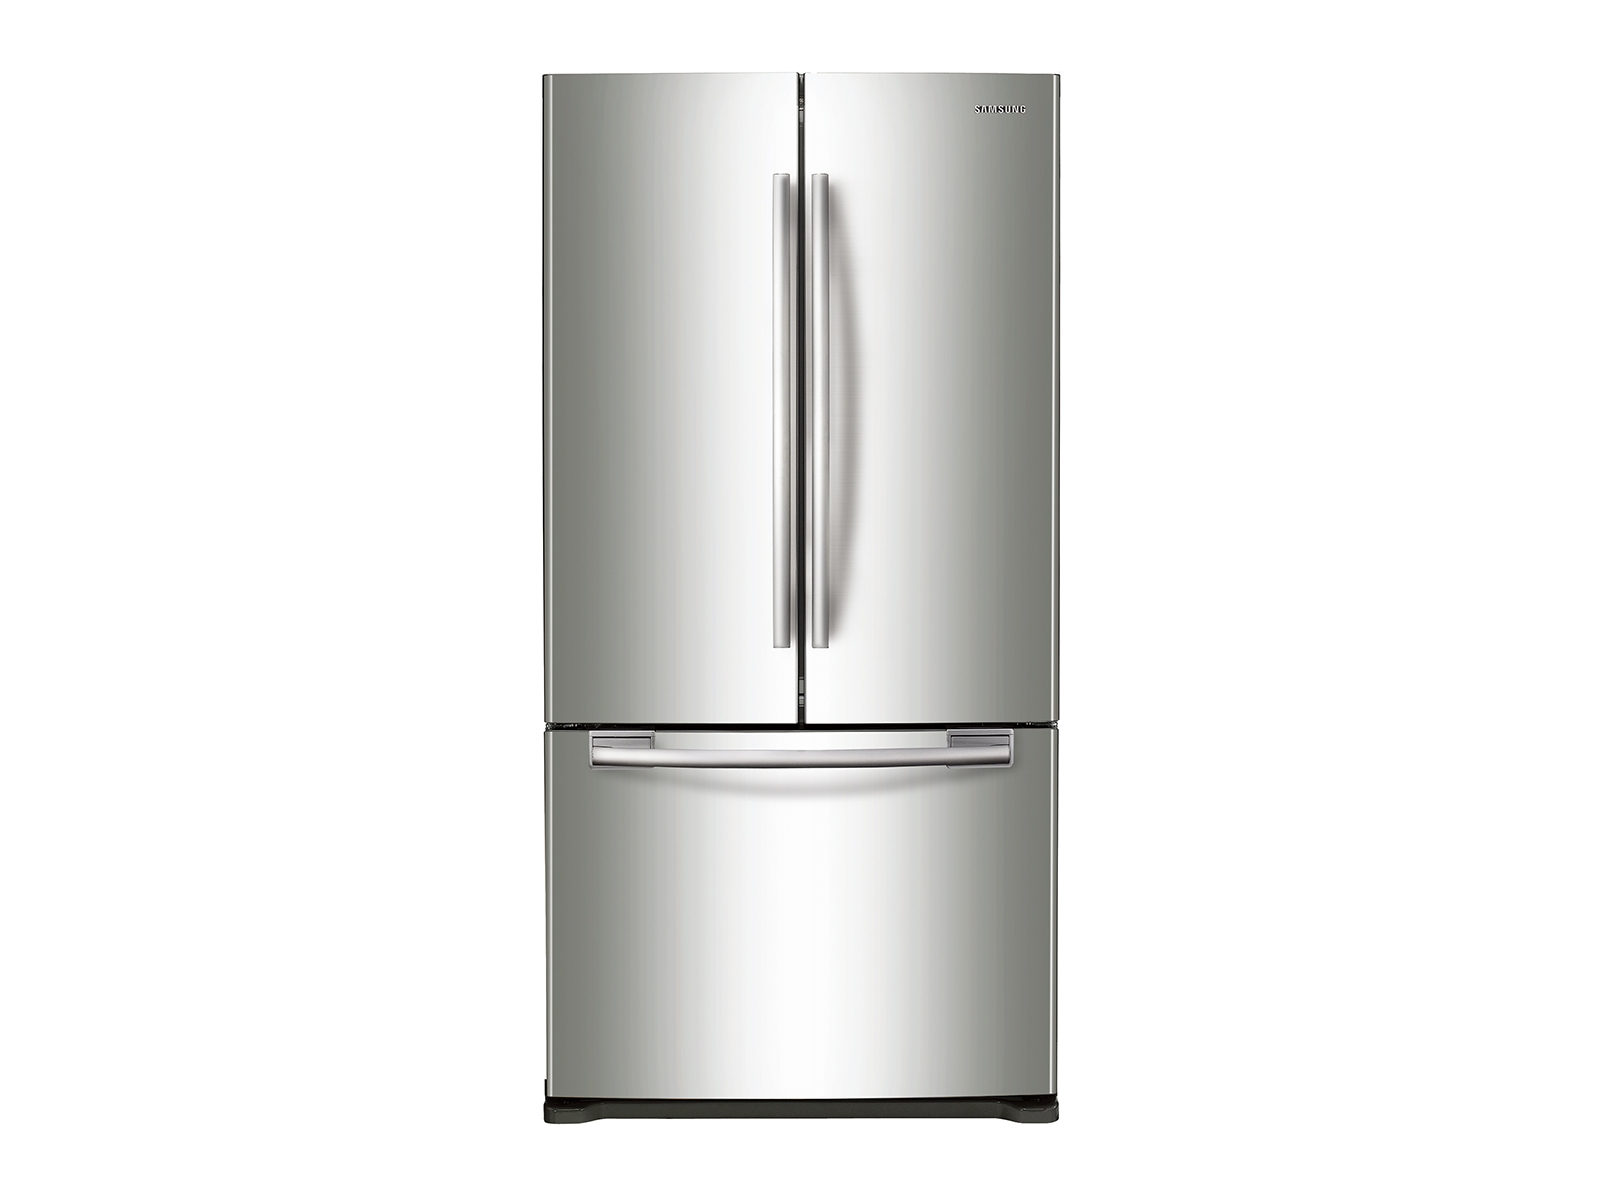 https://image-us.samsung.com/SamsungUS/home/home-appliances/refrigerators/french-doors/pdp/RF20HFENBSR/01_Refrigerator_French-Door_RF20HFENBSR_Front_Closed_Silver.jpg?$product-details-jpg$